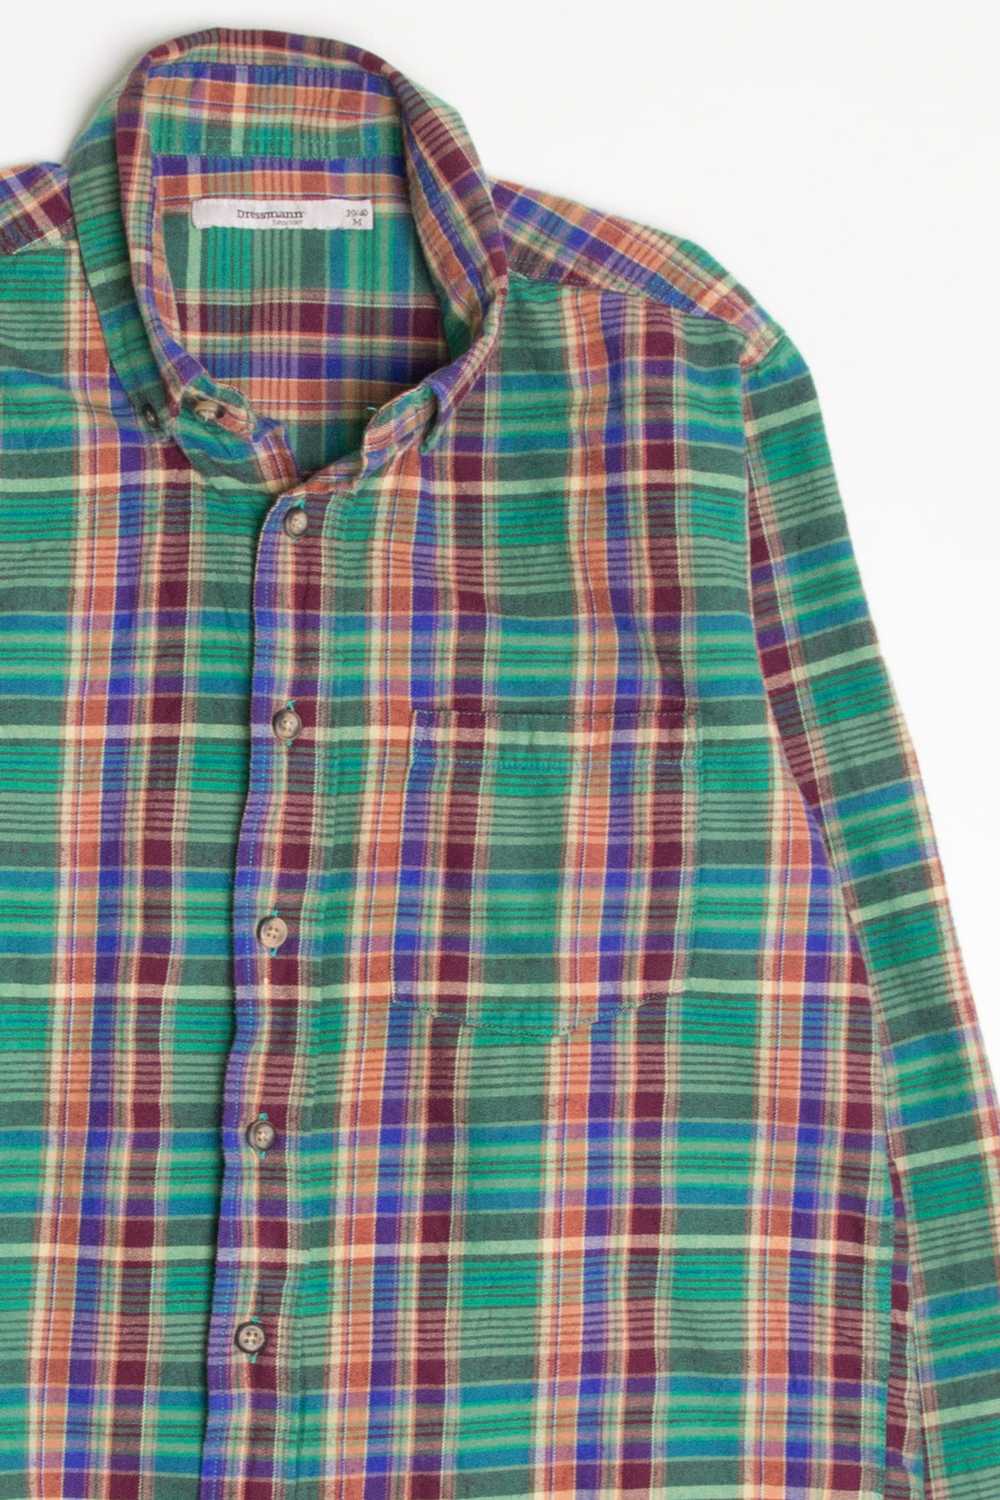 Vintage Kelly Green Flannel Shirt 4395 - image 1